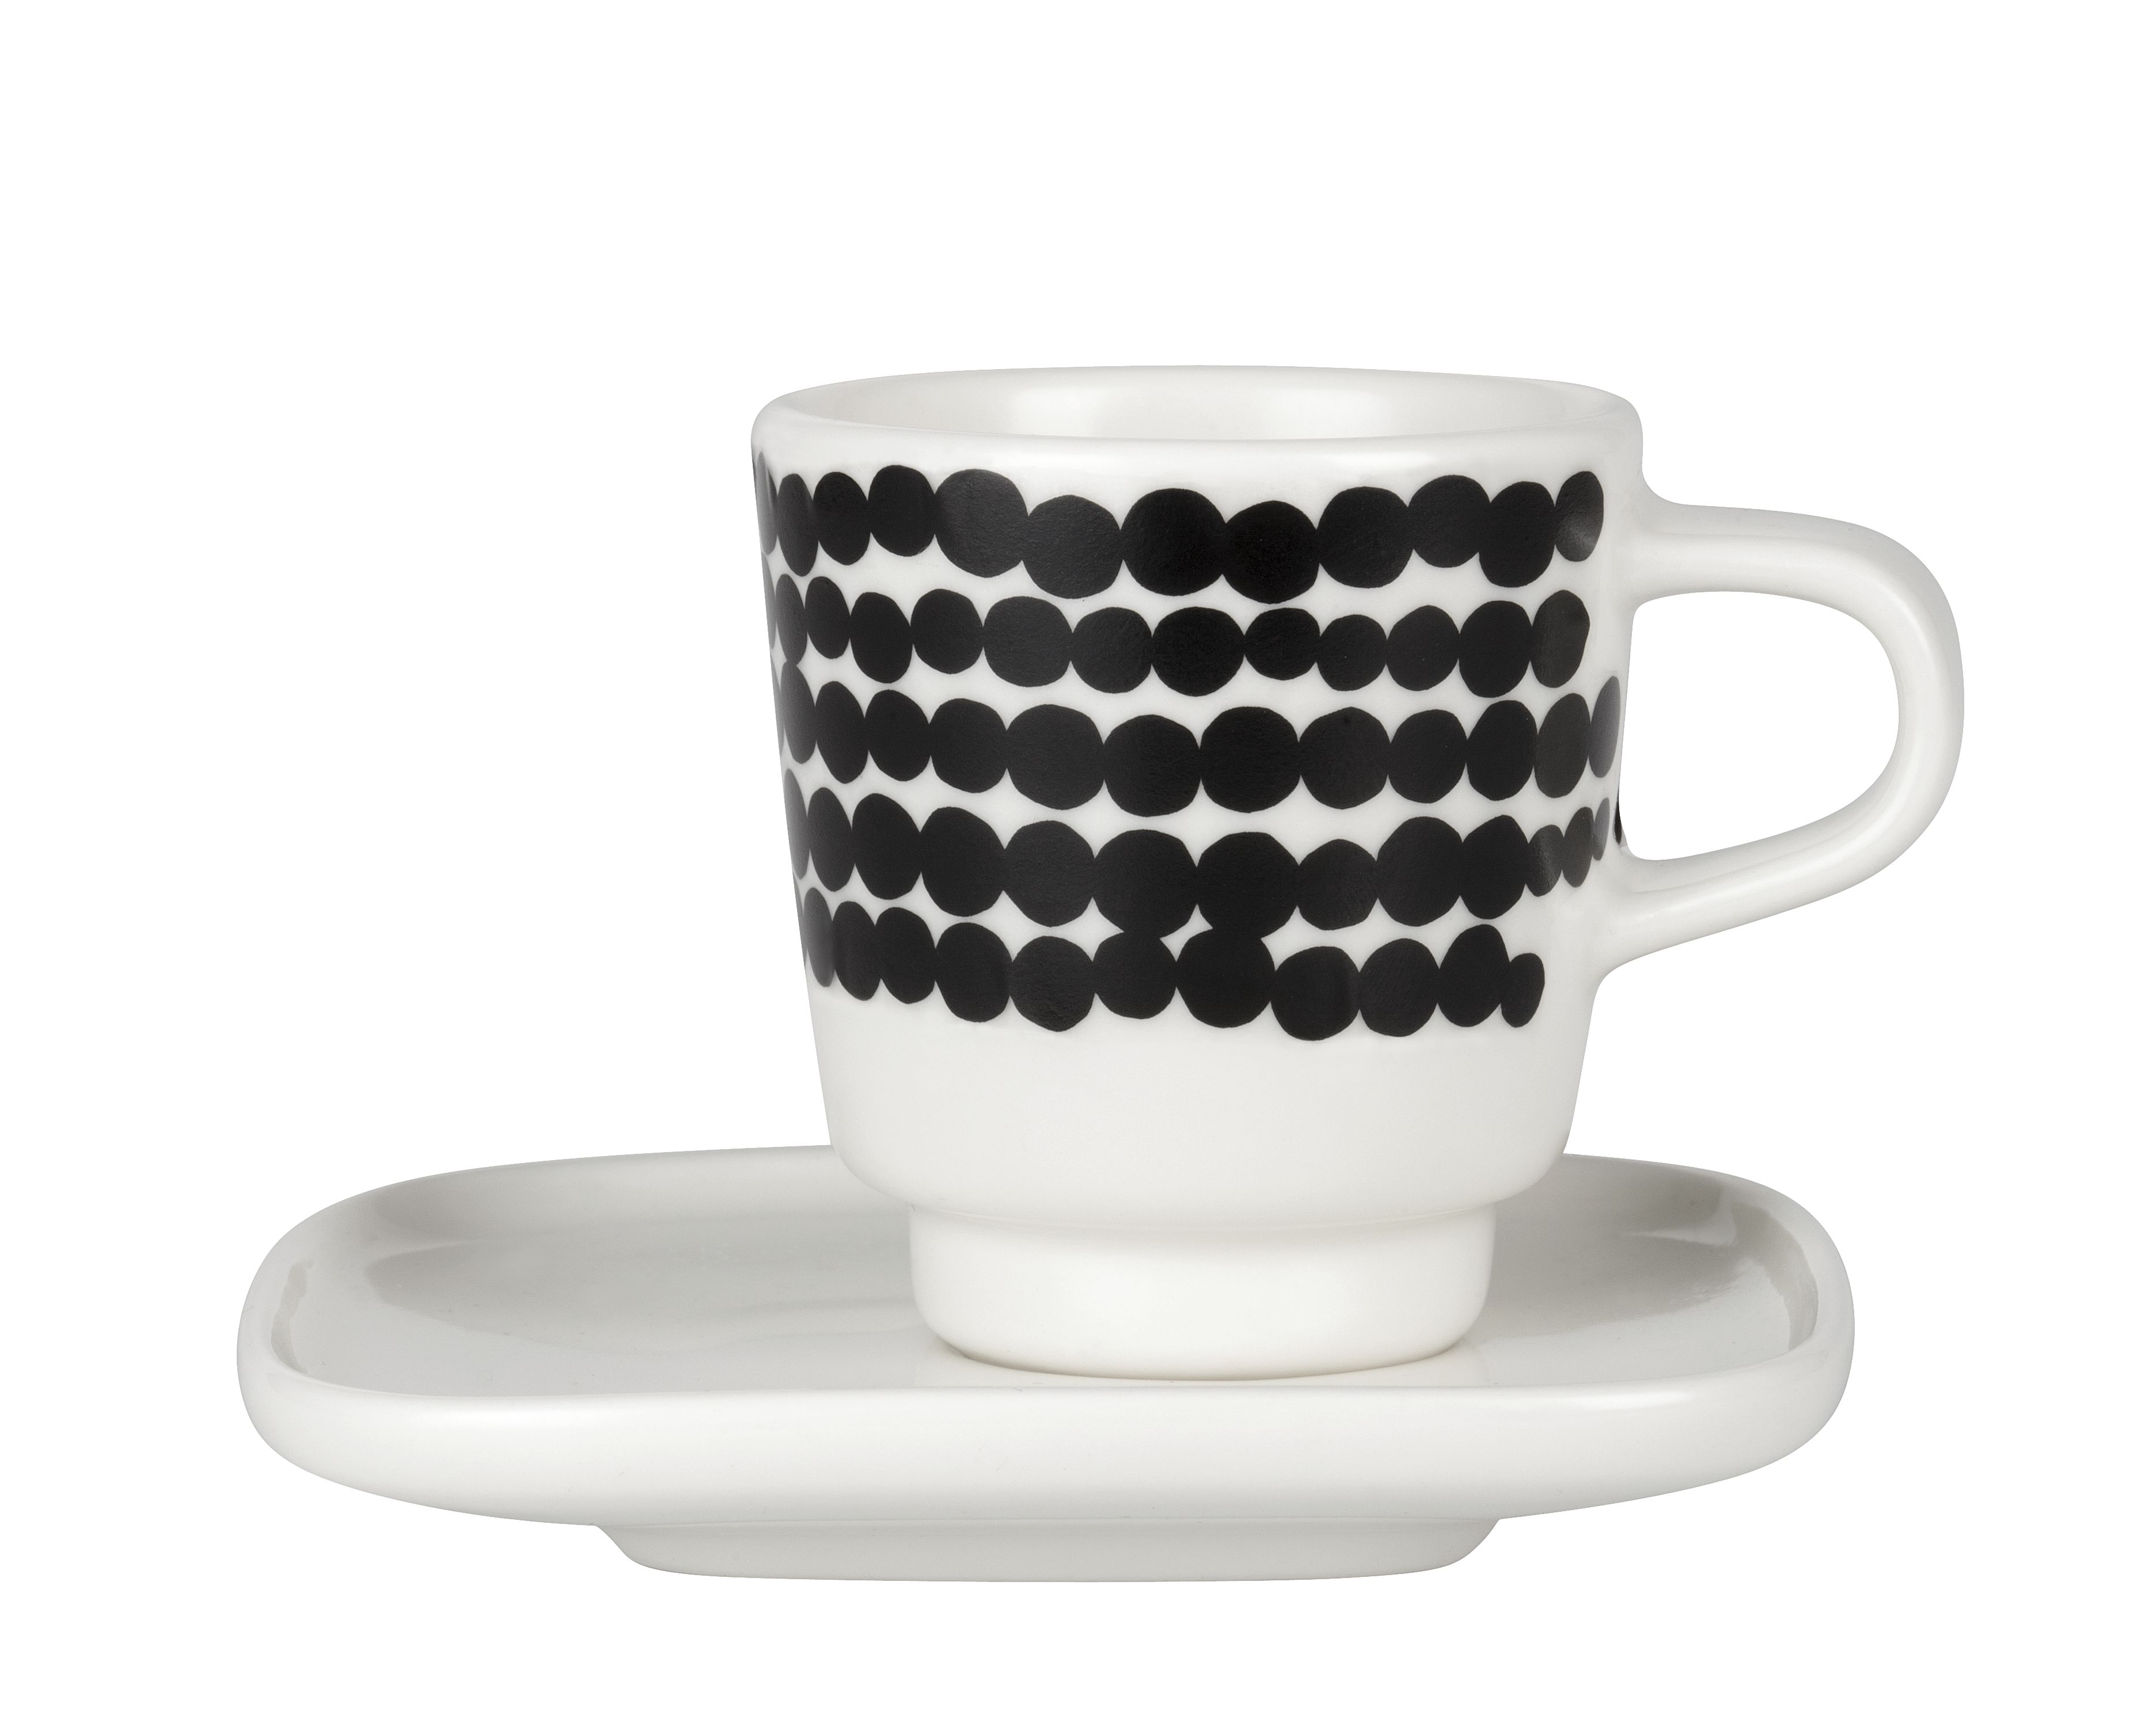 https://www.nordicnest.com/assets/blobs/marimekko-rasymatto-espresso-cup-black-white/p_14080-01-01-d61412aada.jpg